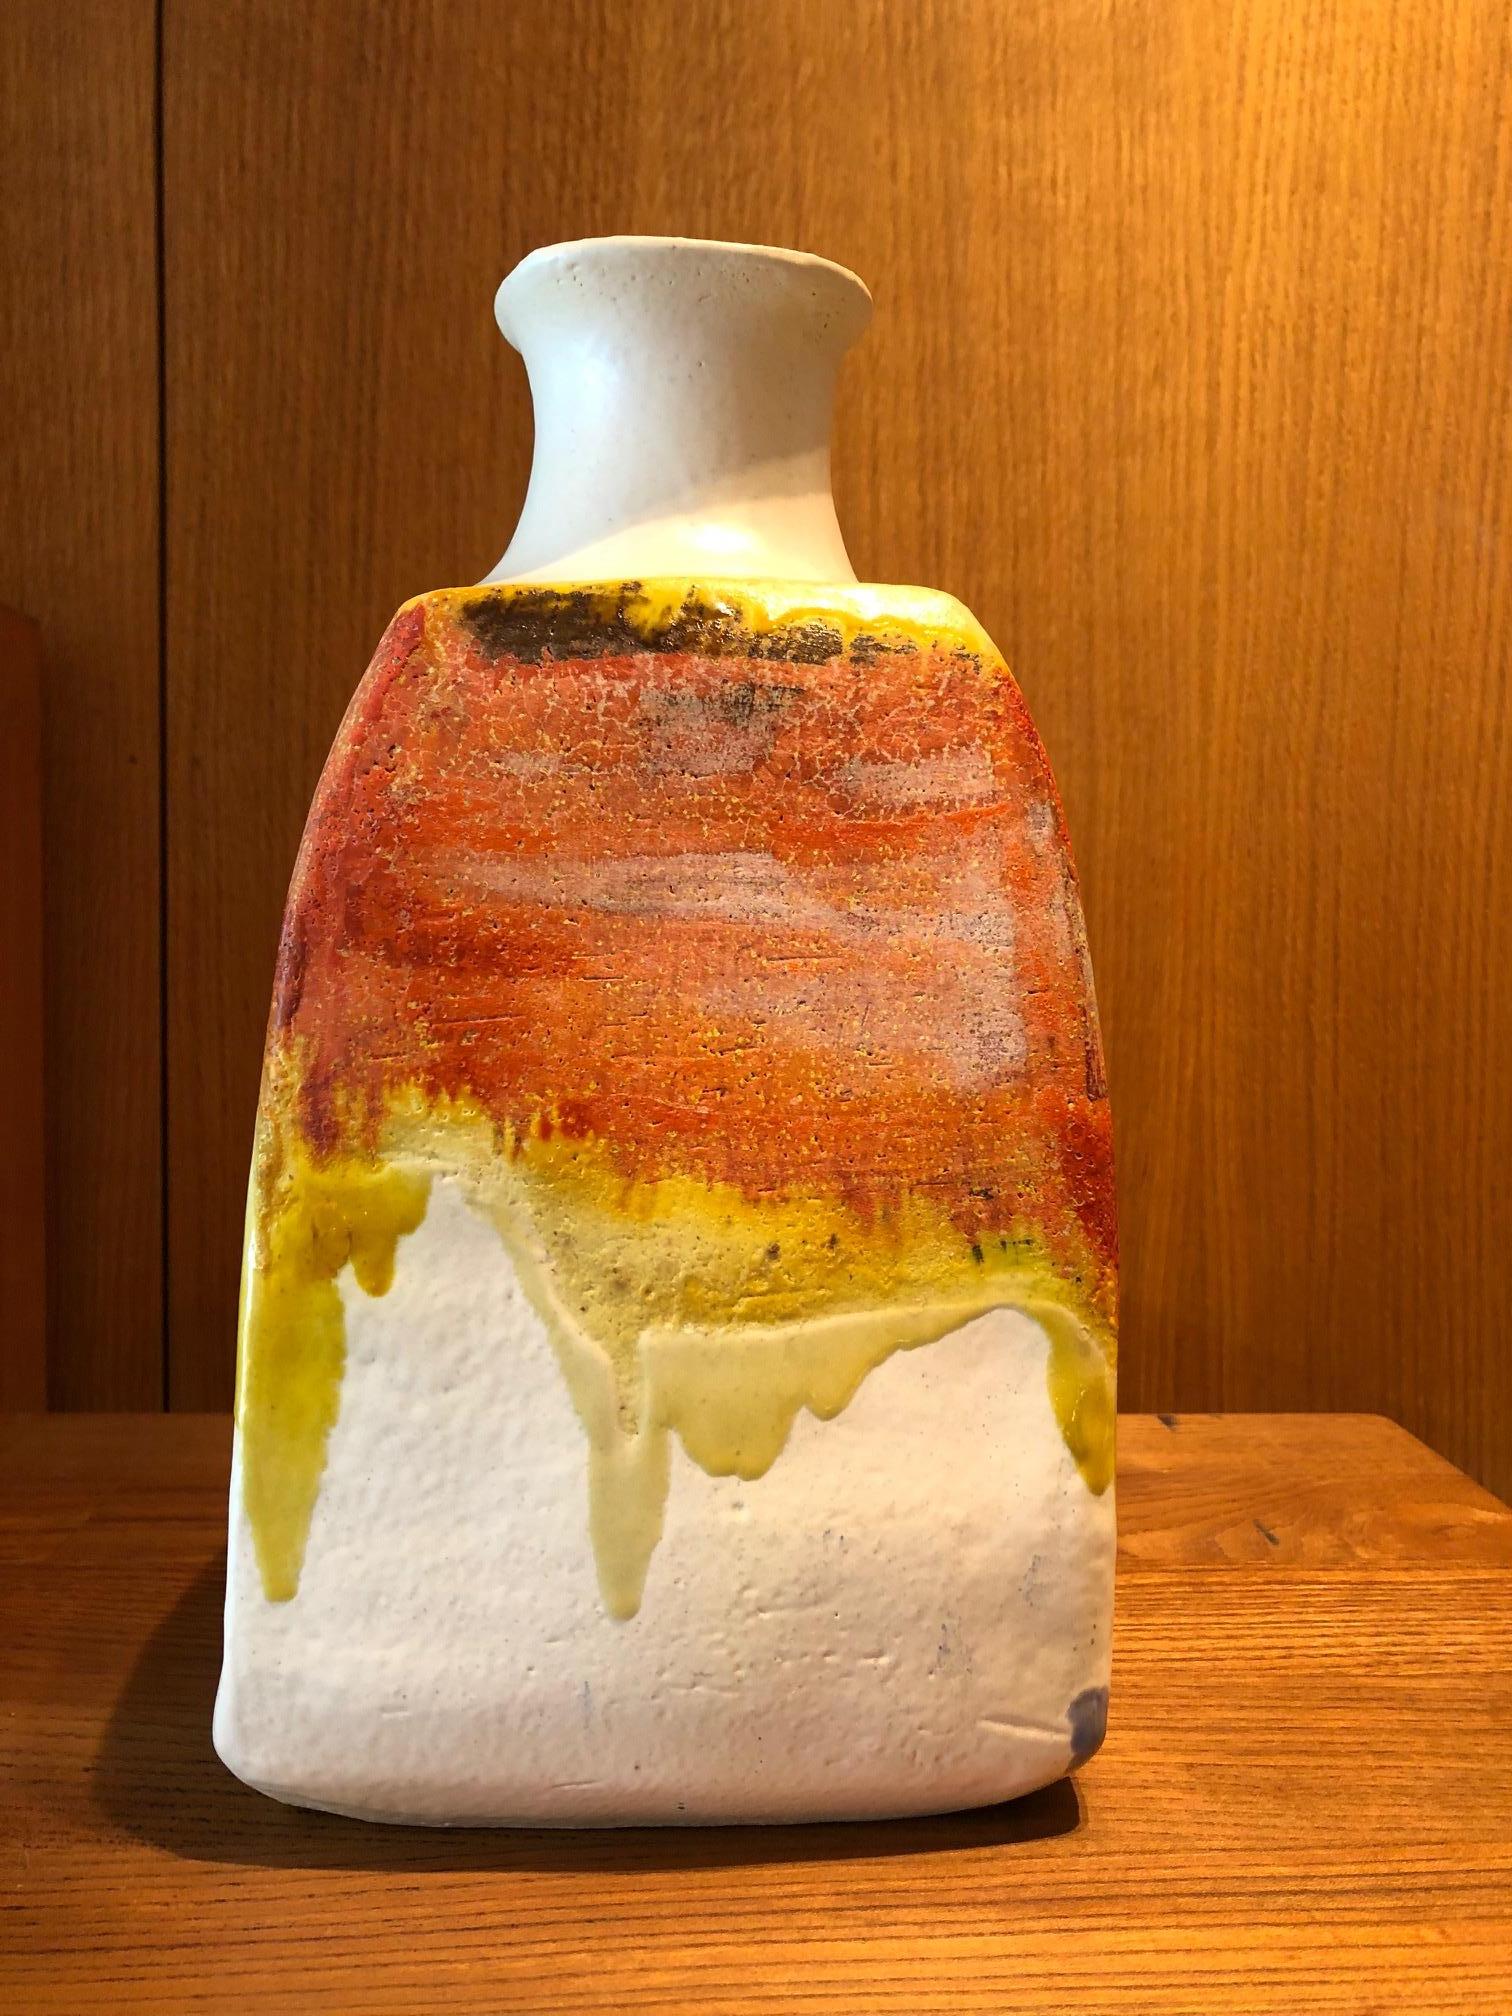 Italian Ceramic Vase by Marcello Fantoni For Sale